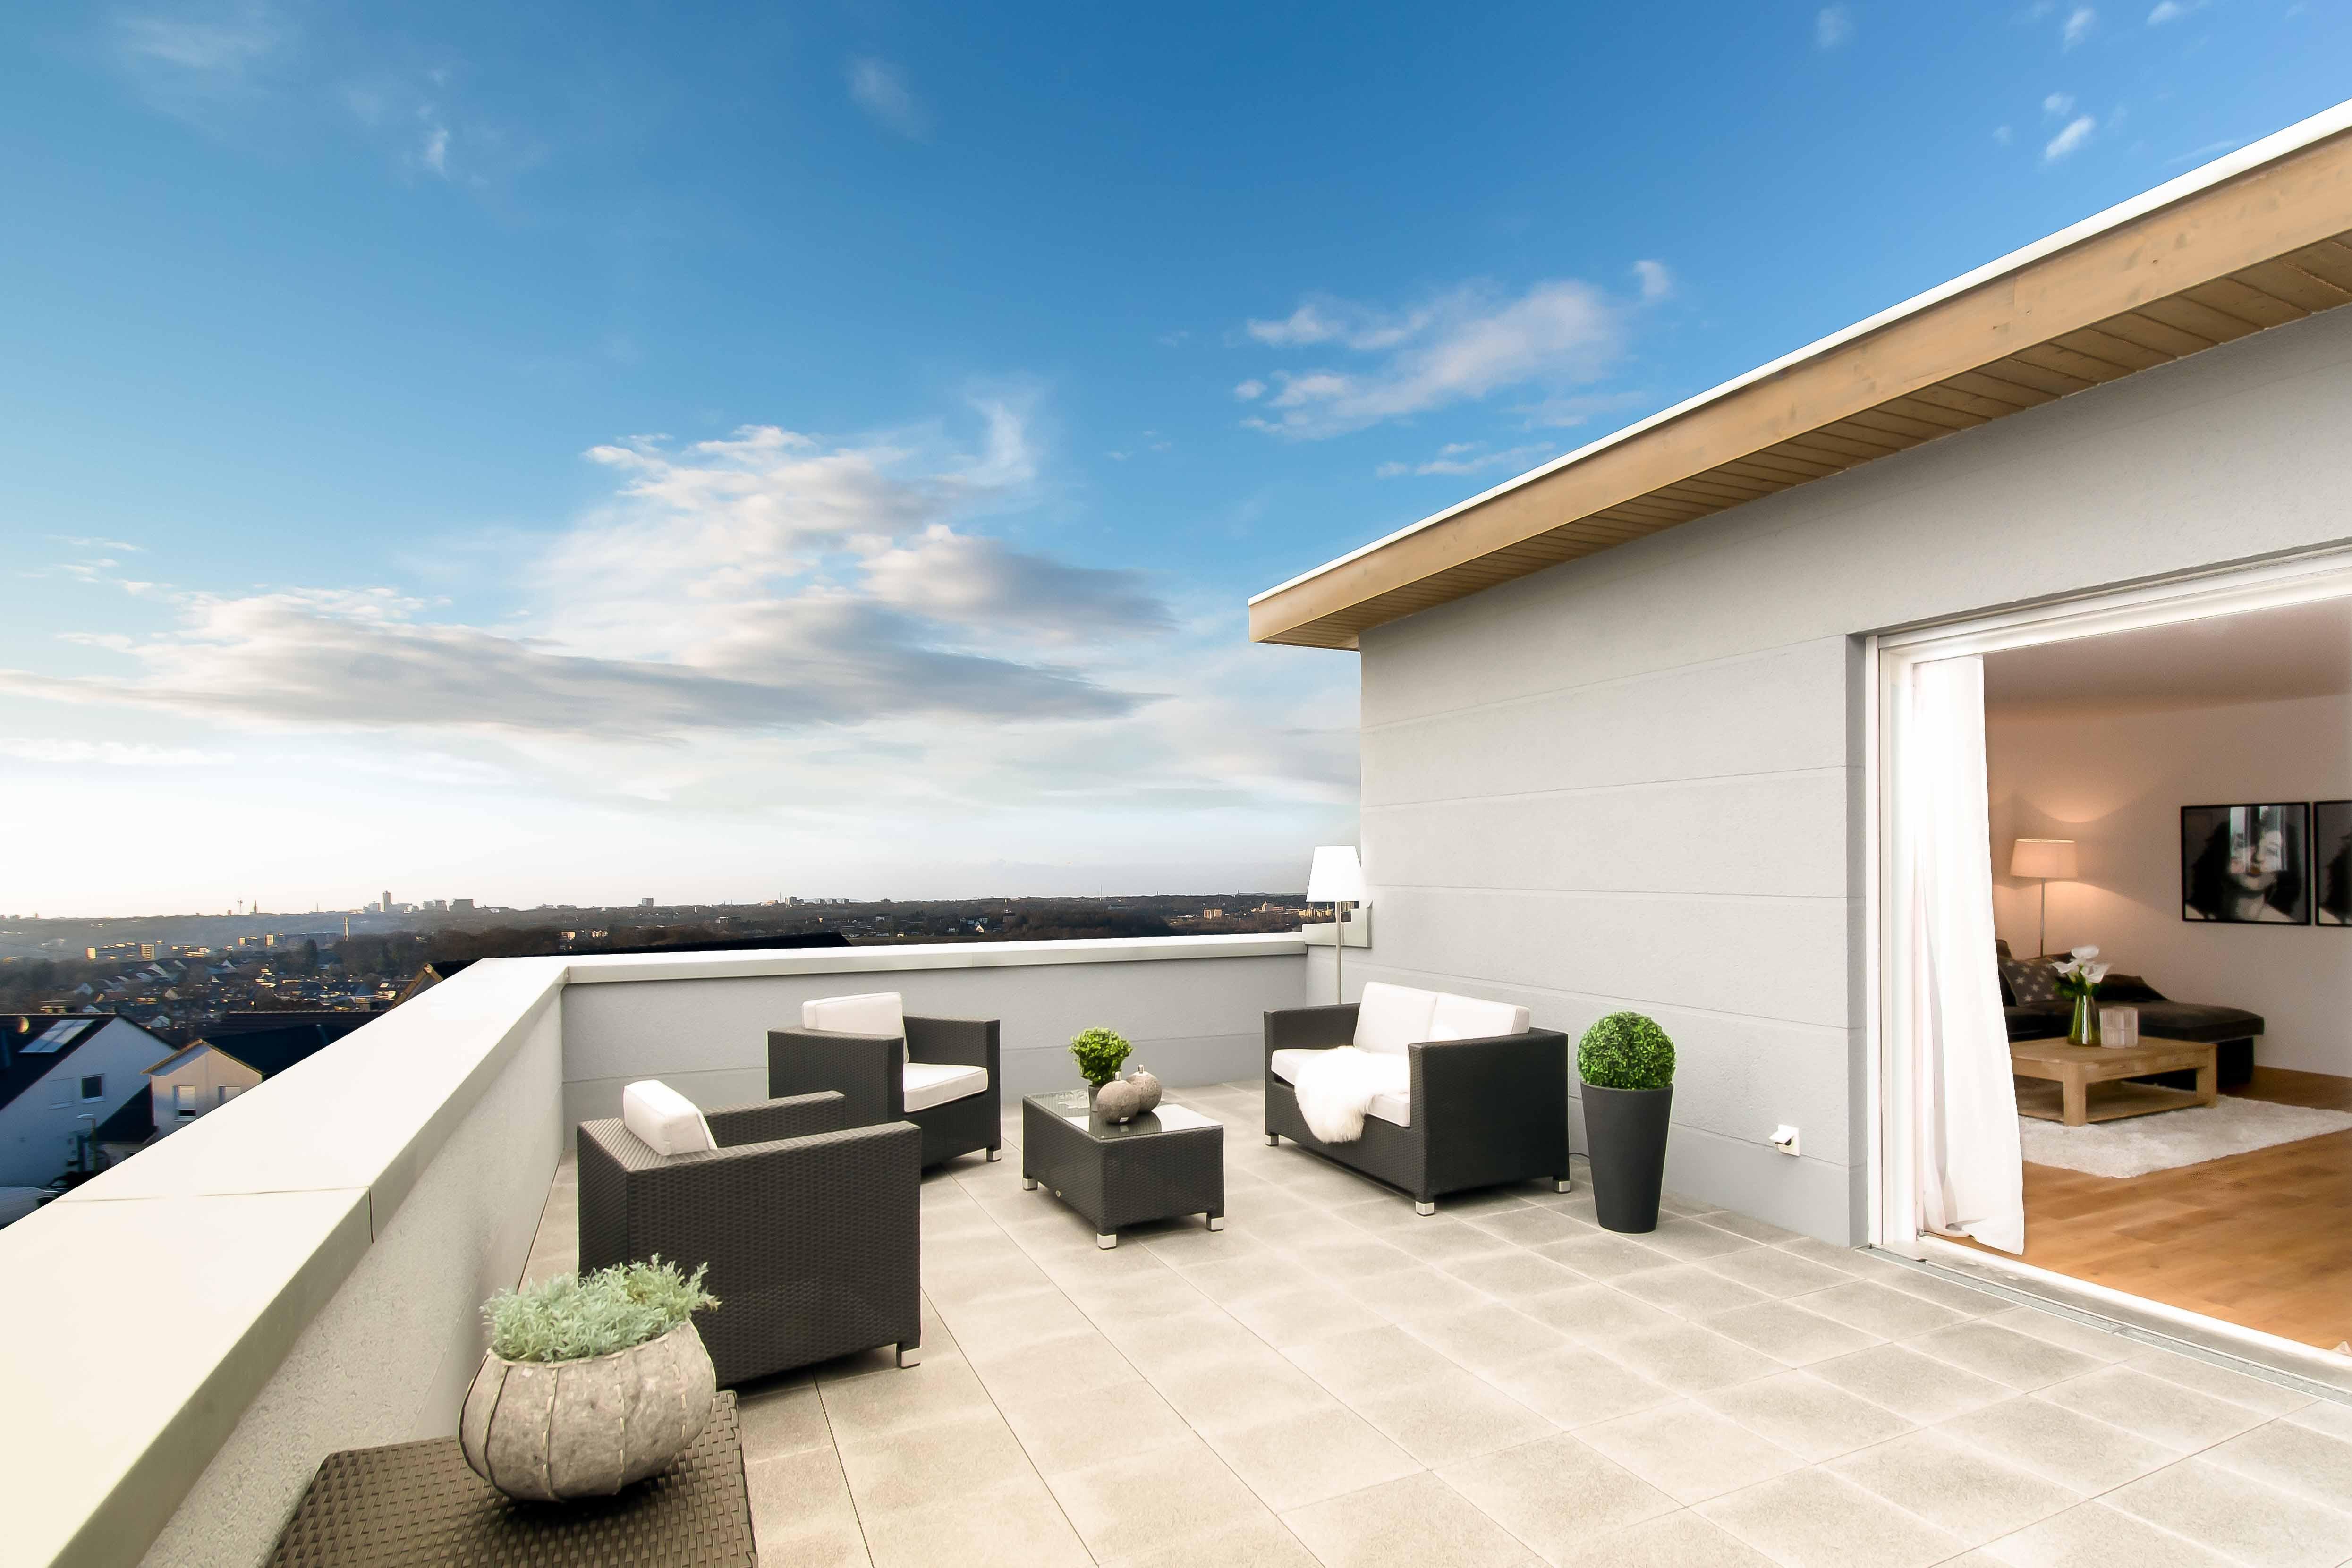 Home Staging - Terrasse #couchtisch #terrasse #sessel #gartenmöbel #sofa #grauersessel #balkonmöbel #terrassengestaltung #terrassenmöbel ©Luna Homestaging